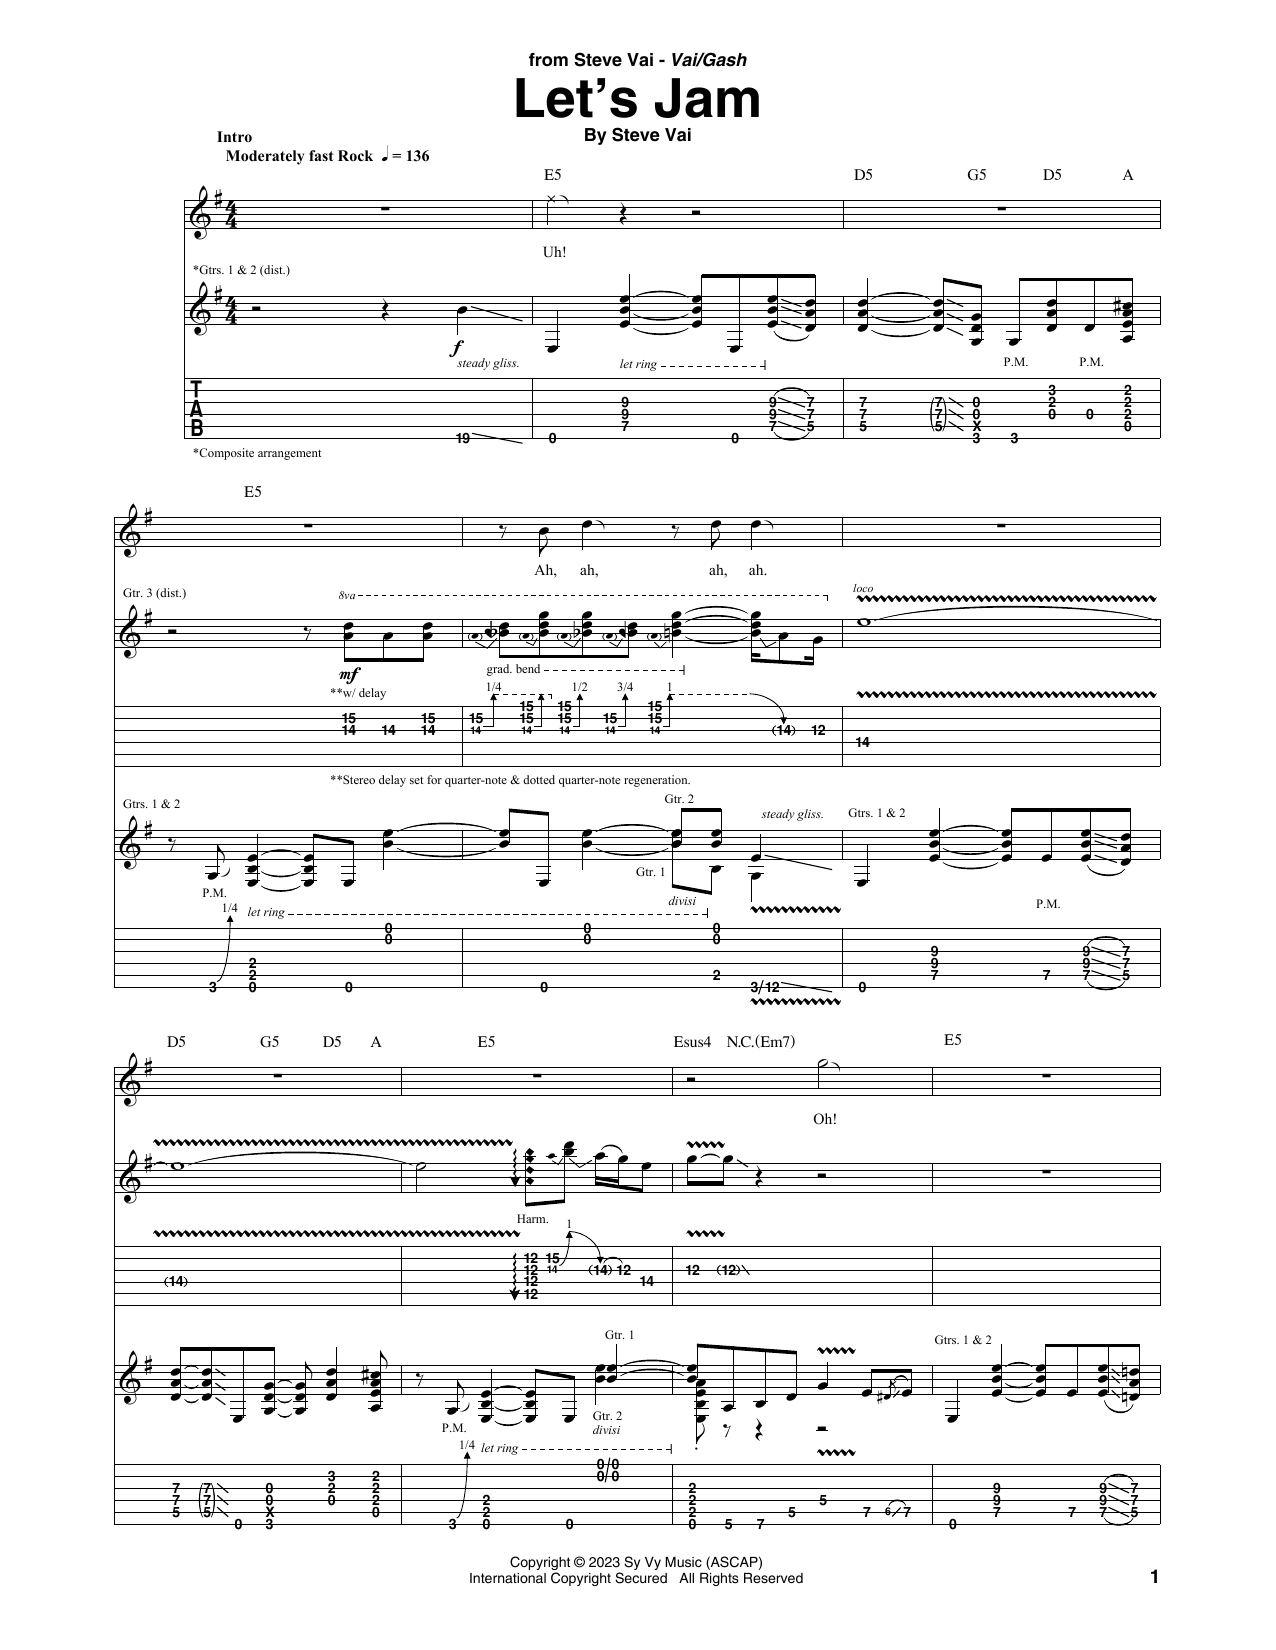 Steve Vai Let's Jam Sheet Music Notes & Chords for Guitar Tab - Download or Print PDF